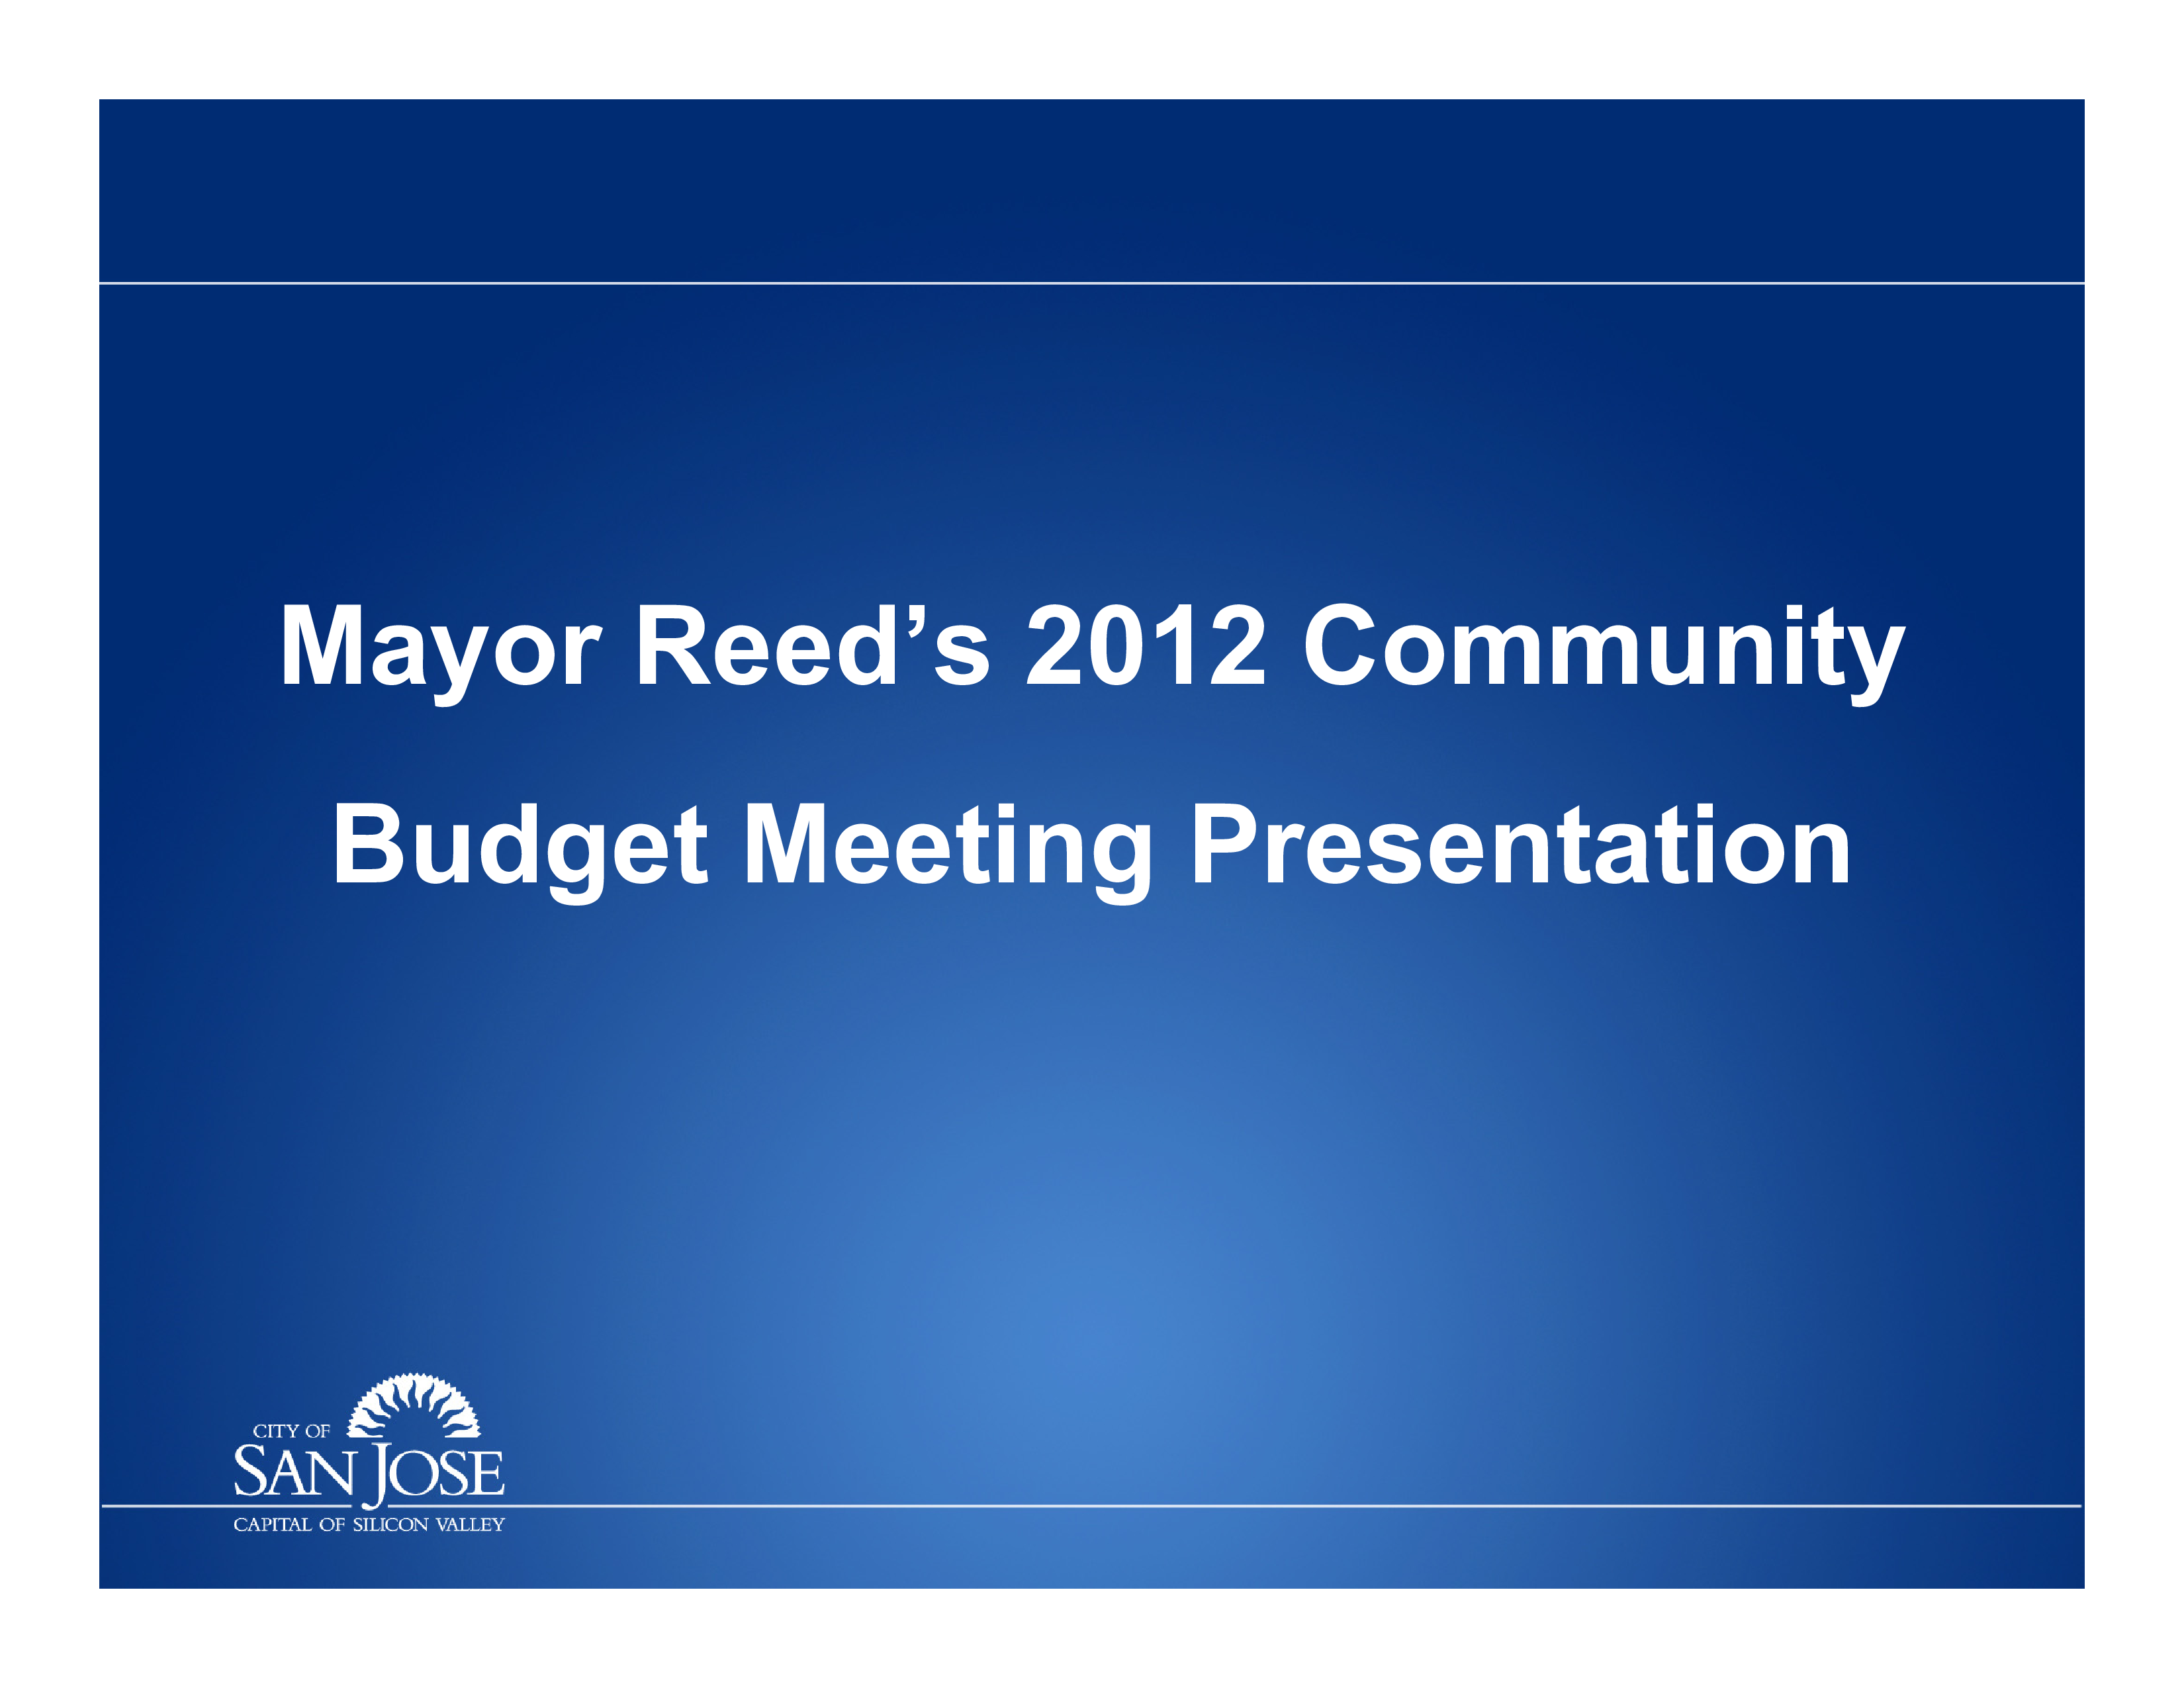 Budget Meeting Presentation main image